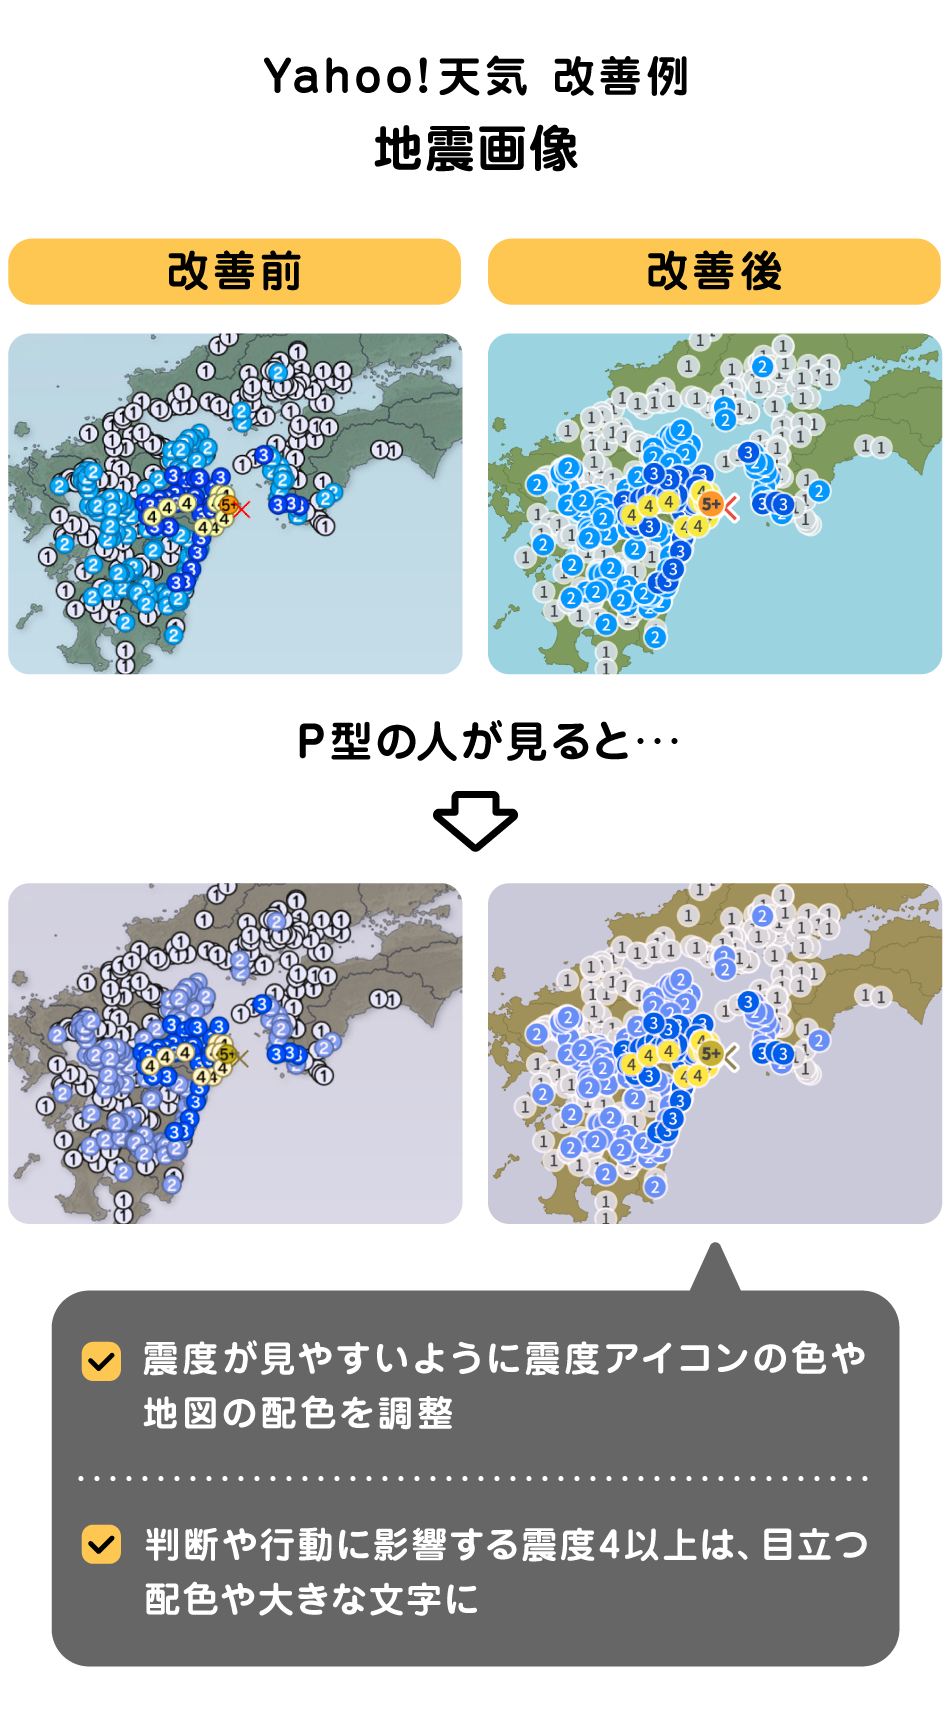 Yahoo!天気の地震画像の改善例。改善前の地震画像と改善後の地震画像を横に並べて比較している。加えてP型の色覚特性のシミュレーションの図をその下に並べている。